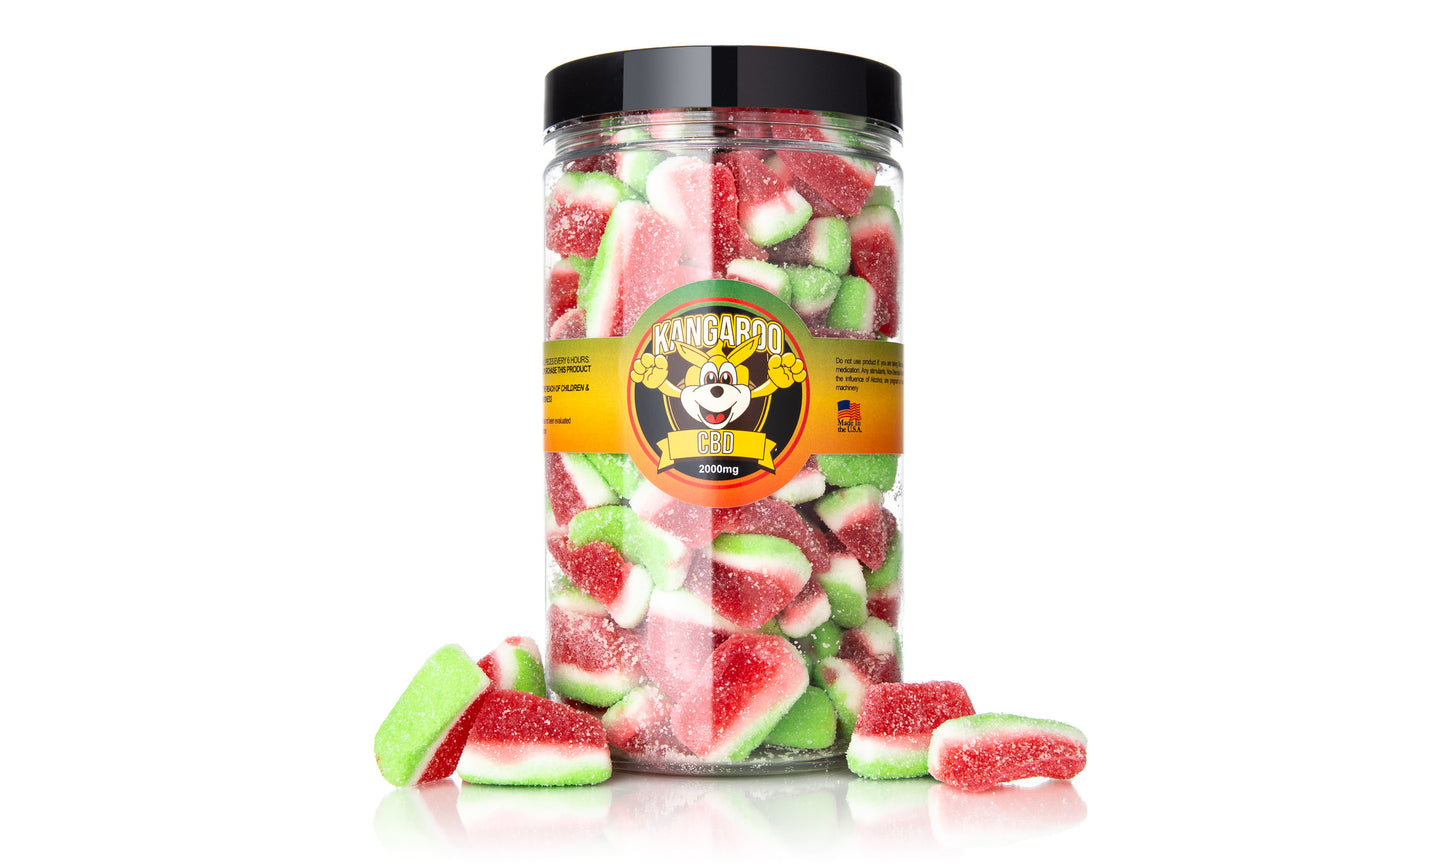 Kangaroo CBD Infused Watermelon Gummy Slices